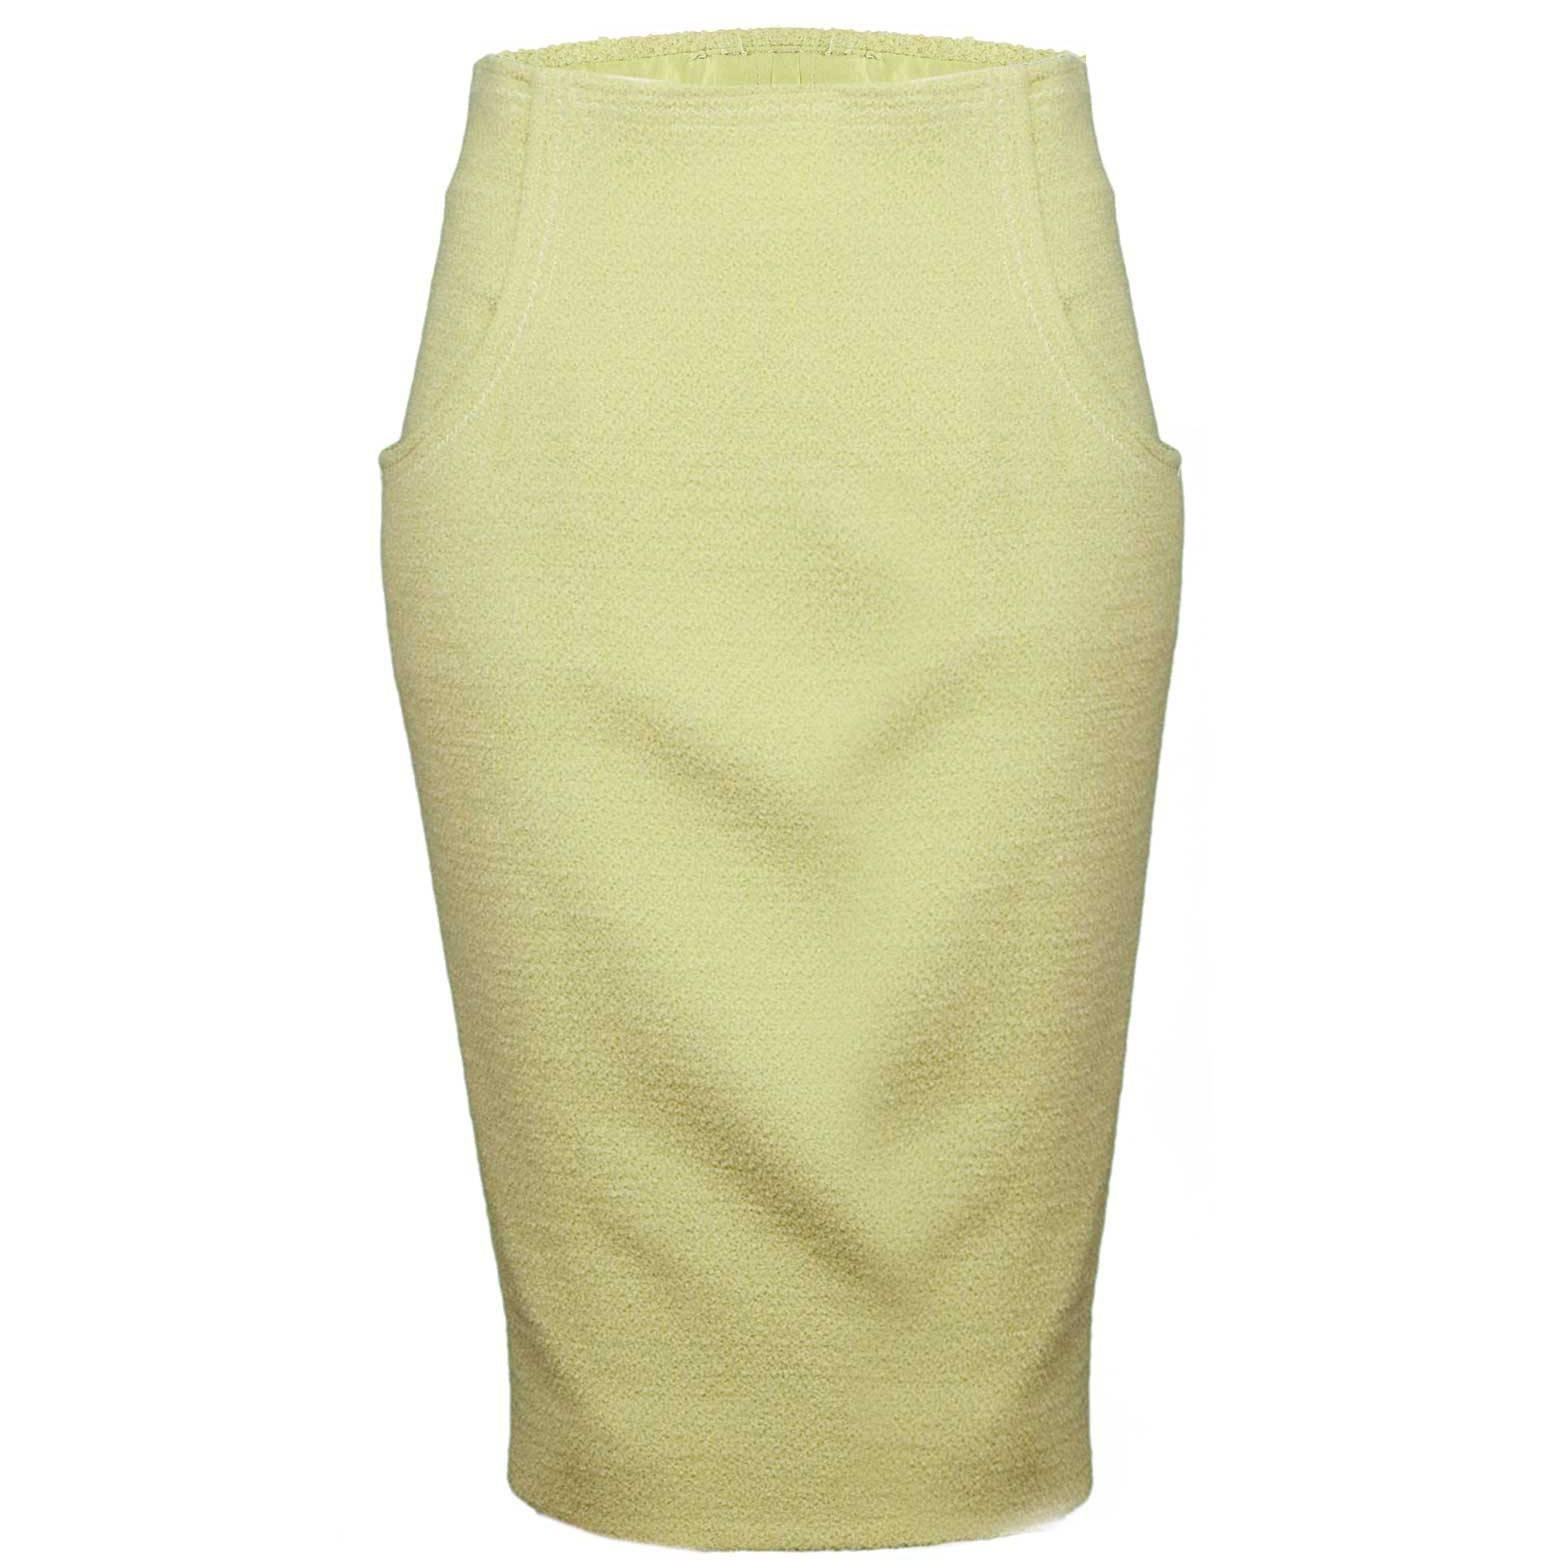 Chanel Chartreuse Boucle Skirt sz M